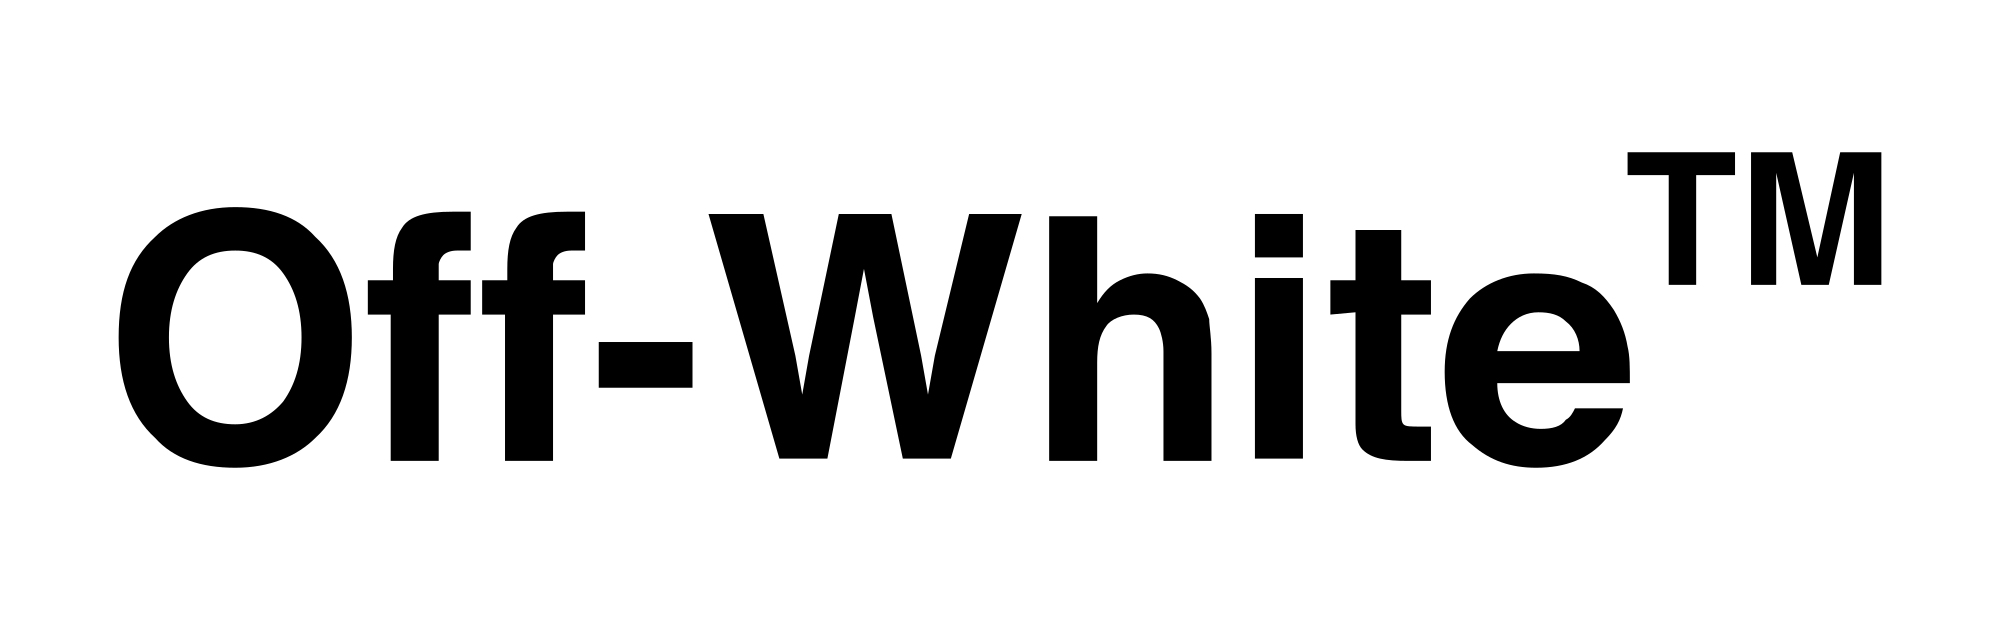 Off White Black Logo - Off white logo png 2 » PNG Image